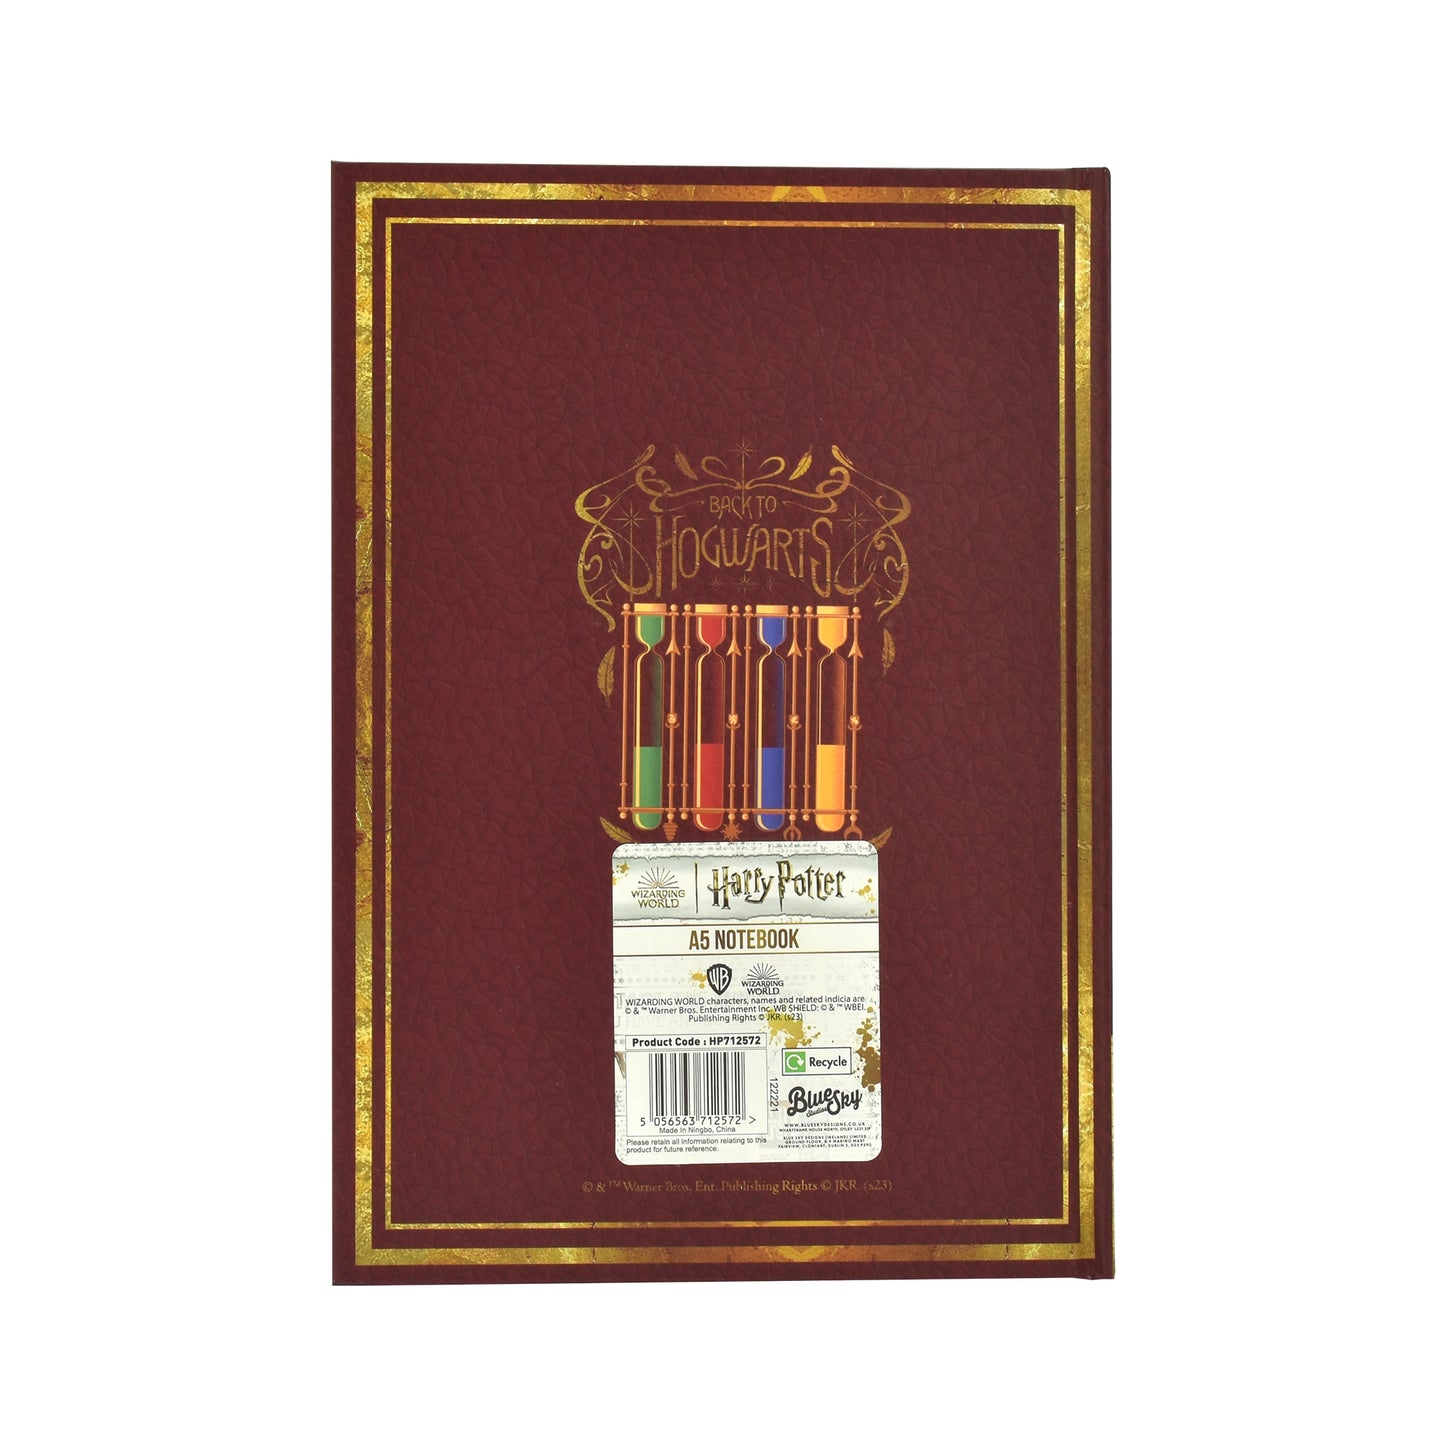 Harry Potter A5 Casebound Notebook Burgundy - Colourful Crest